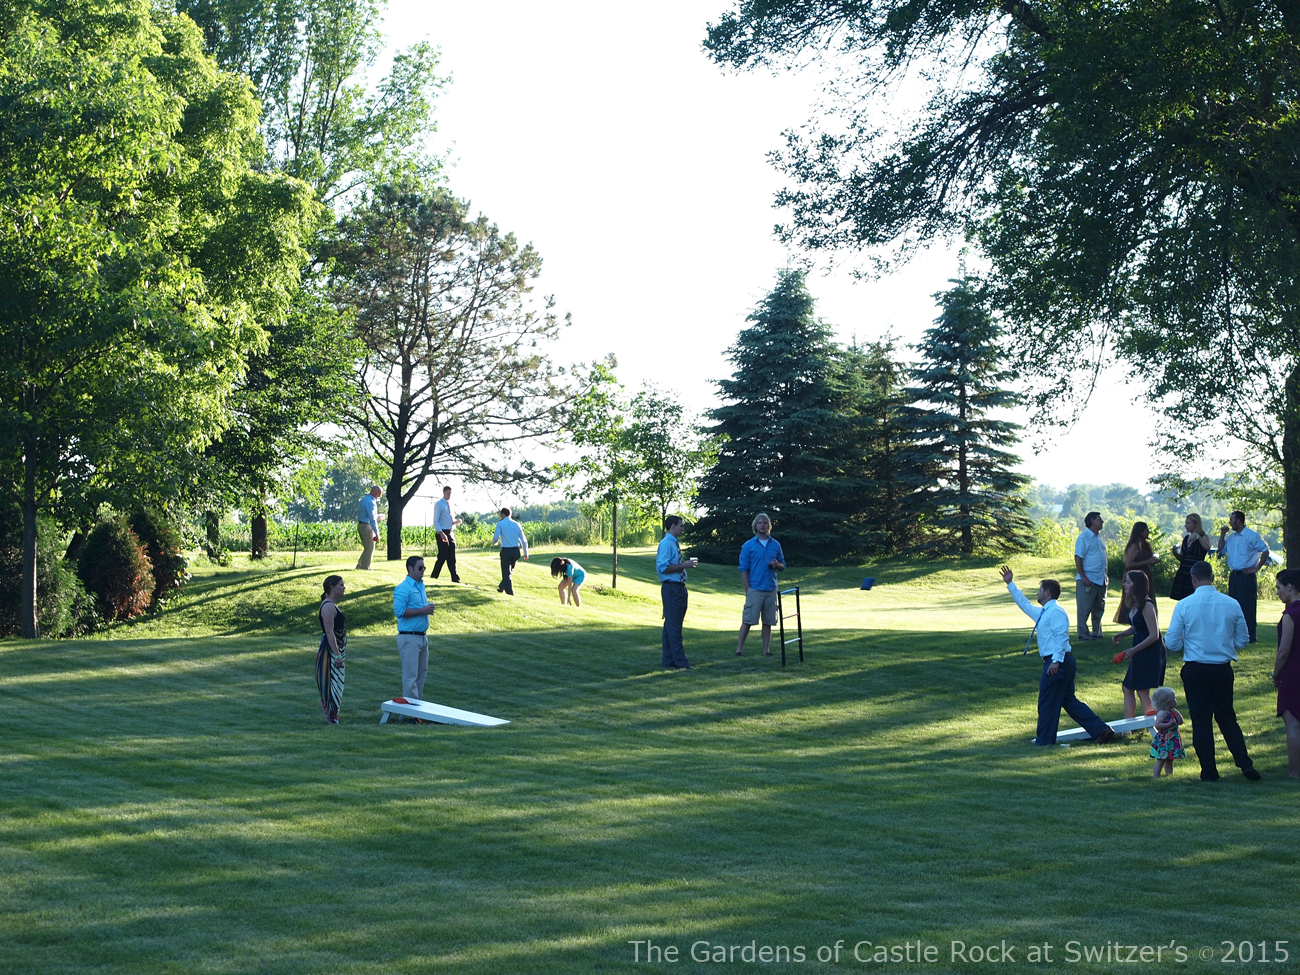 The Gardens of Castle Rock ~ Minnesota Outdoor Wedding Venue - Outdoor Games for your Wedding